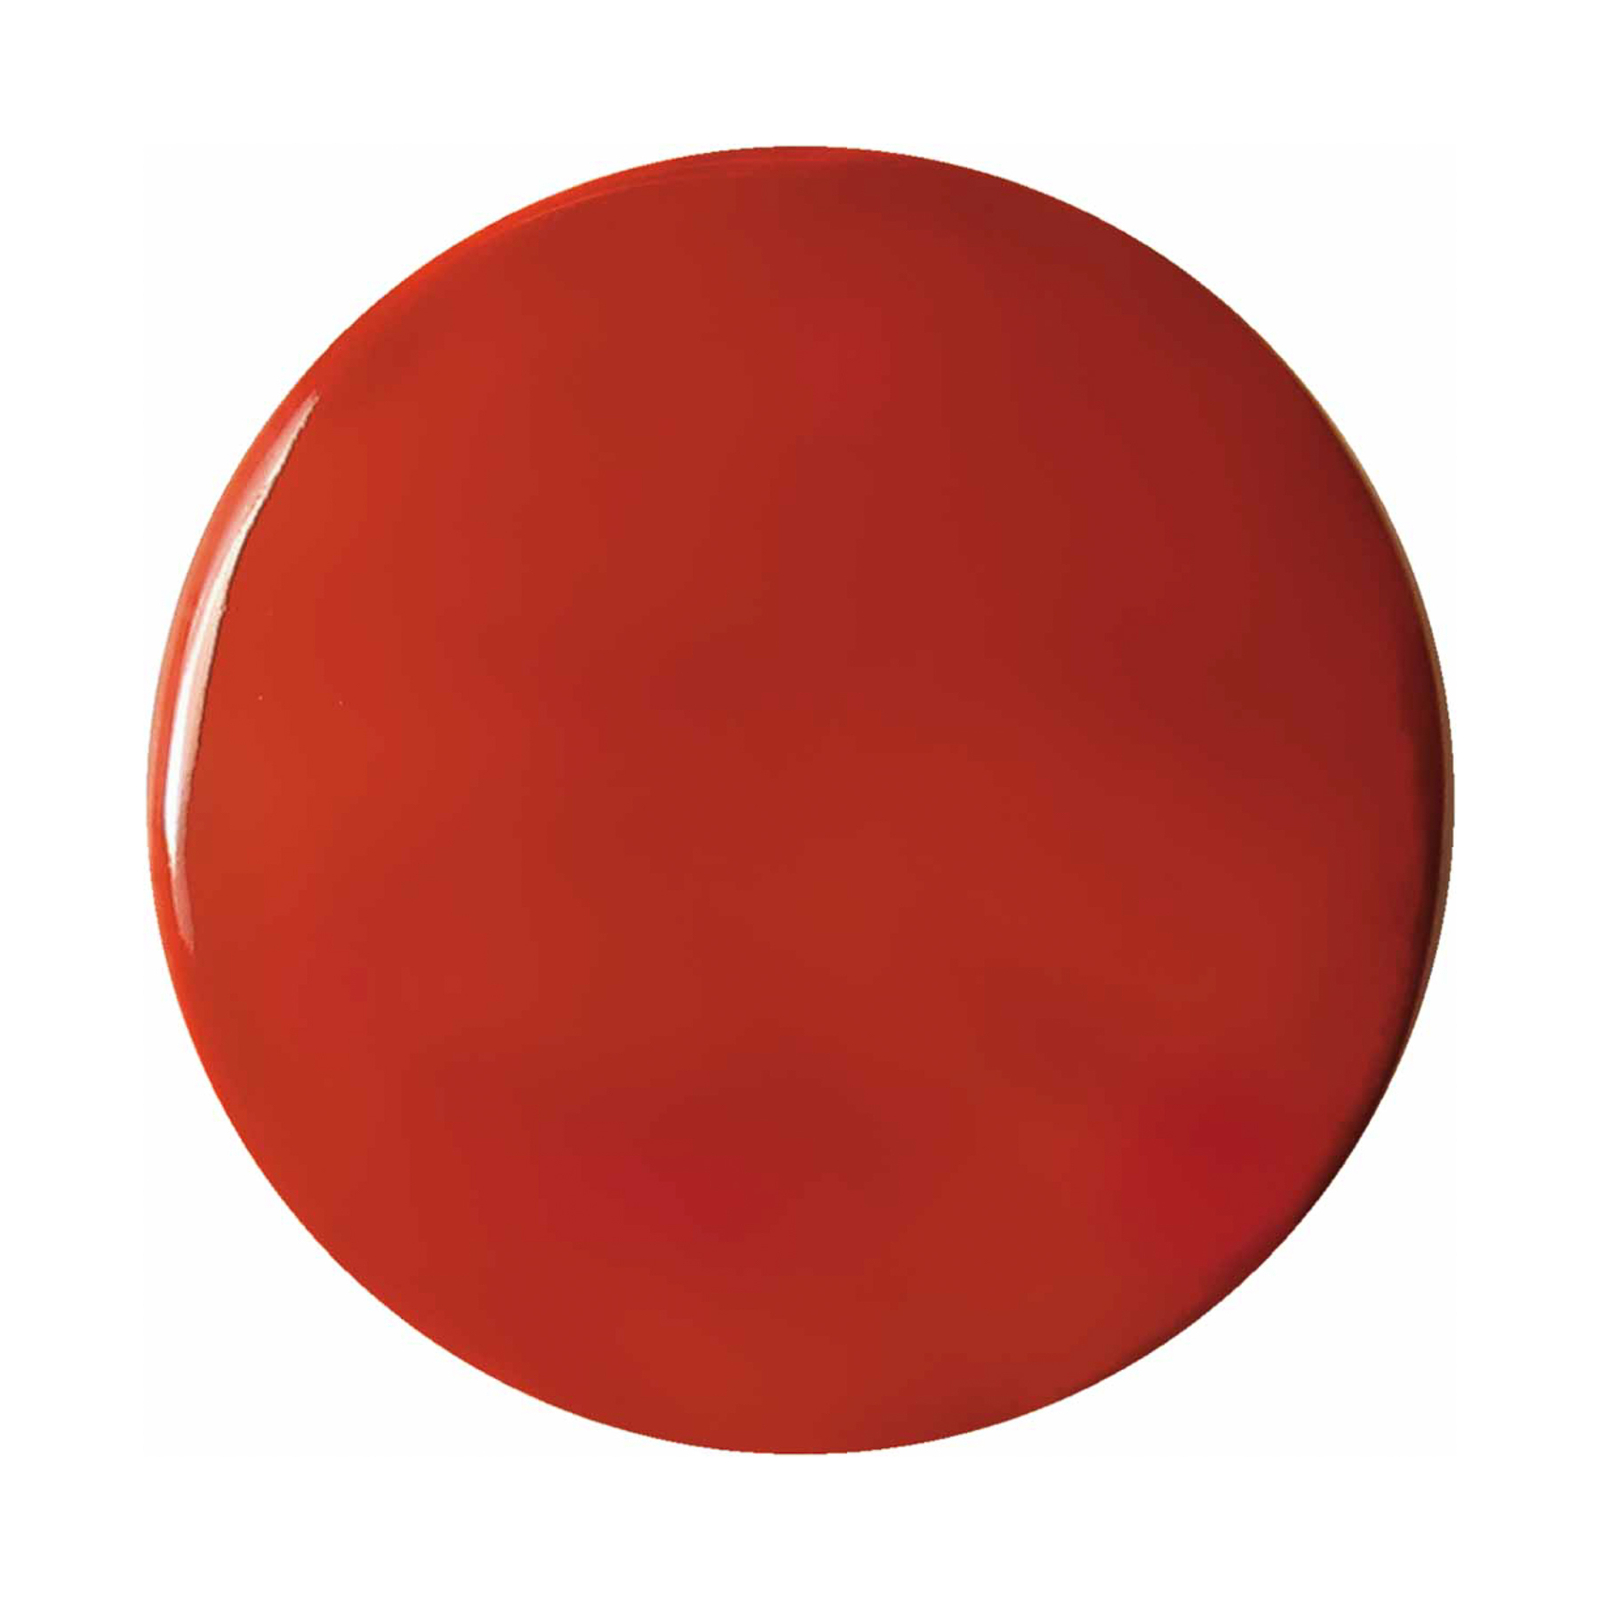 Suspension Ayrton, céramique, 29 cm, rouge